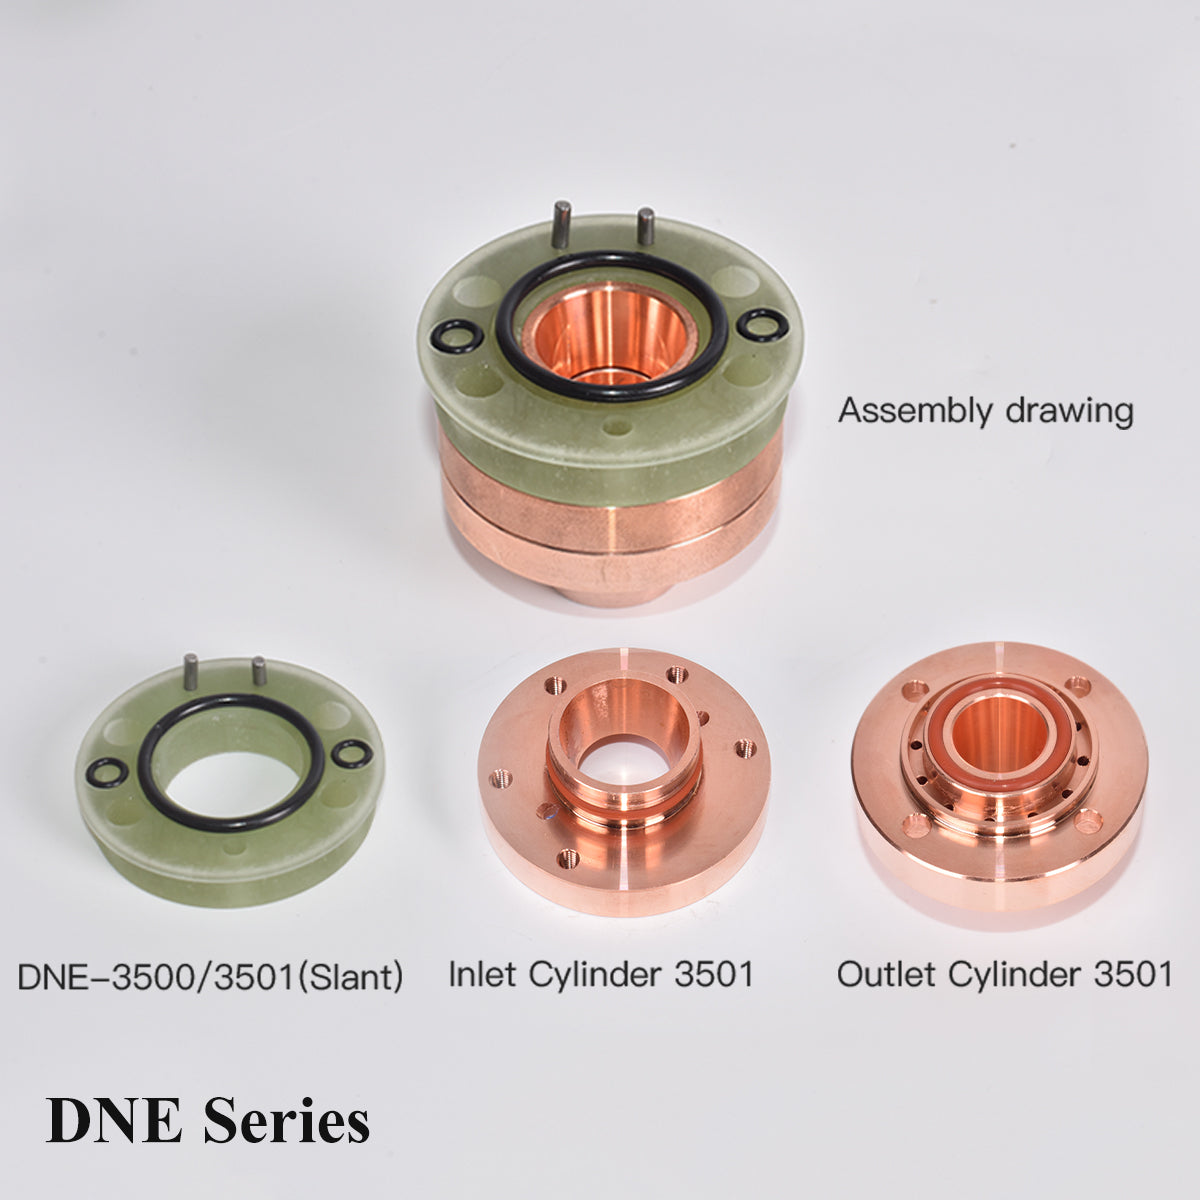 Startnow DNE 3501 Slant Hole Laser Ceramic Insulating Ring 2700/2702